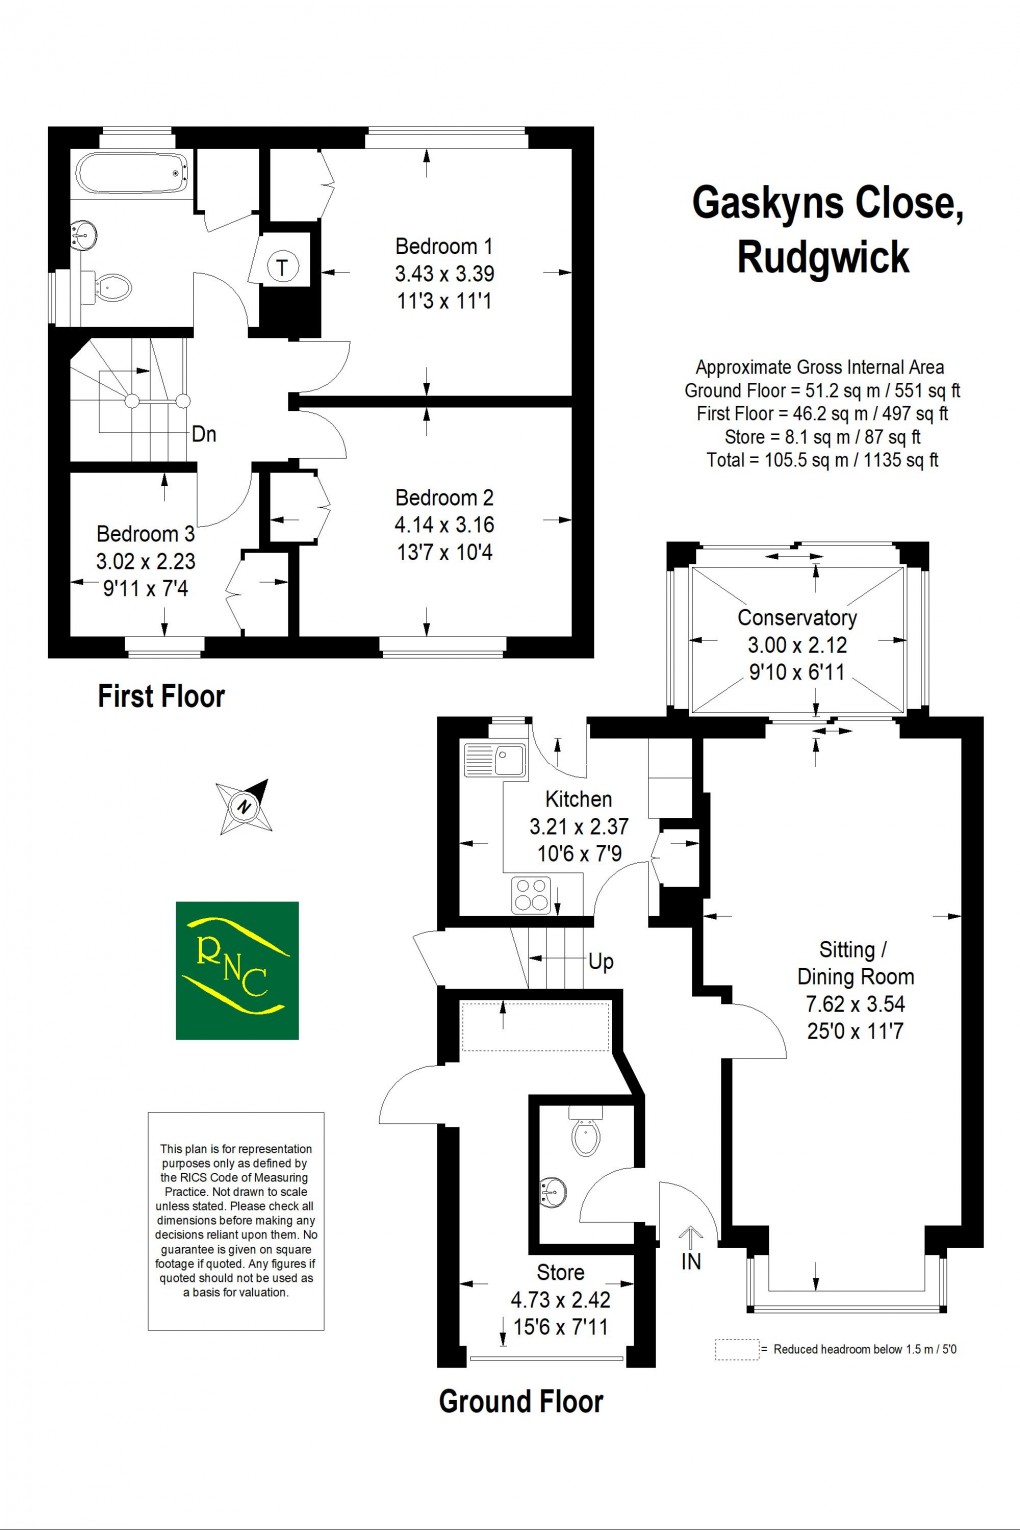 Floorplan for Gaskyns Close, Rudgwick